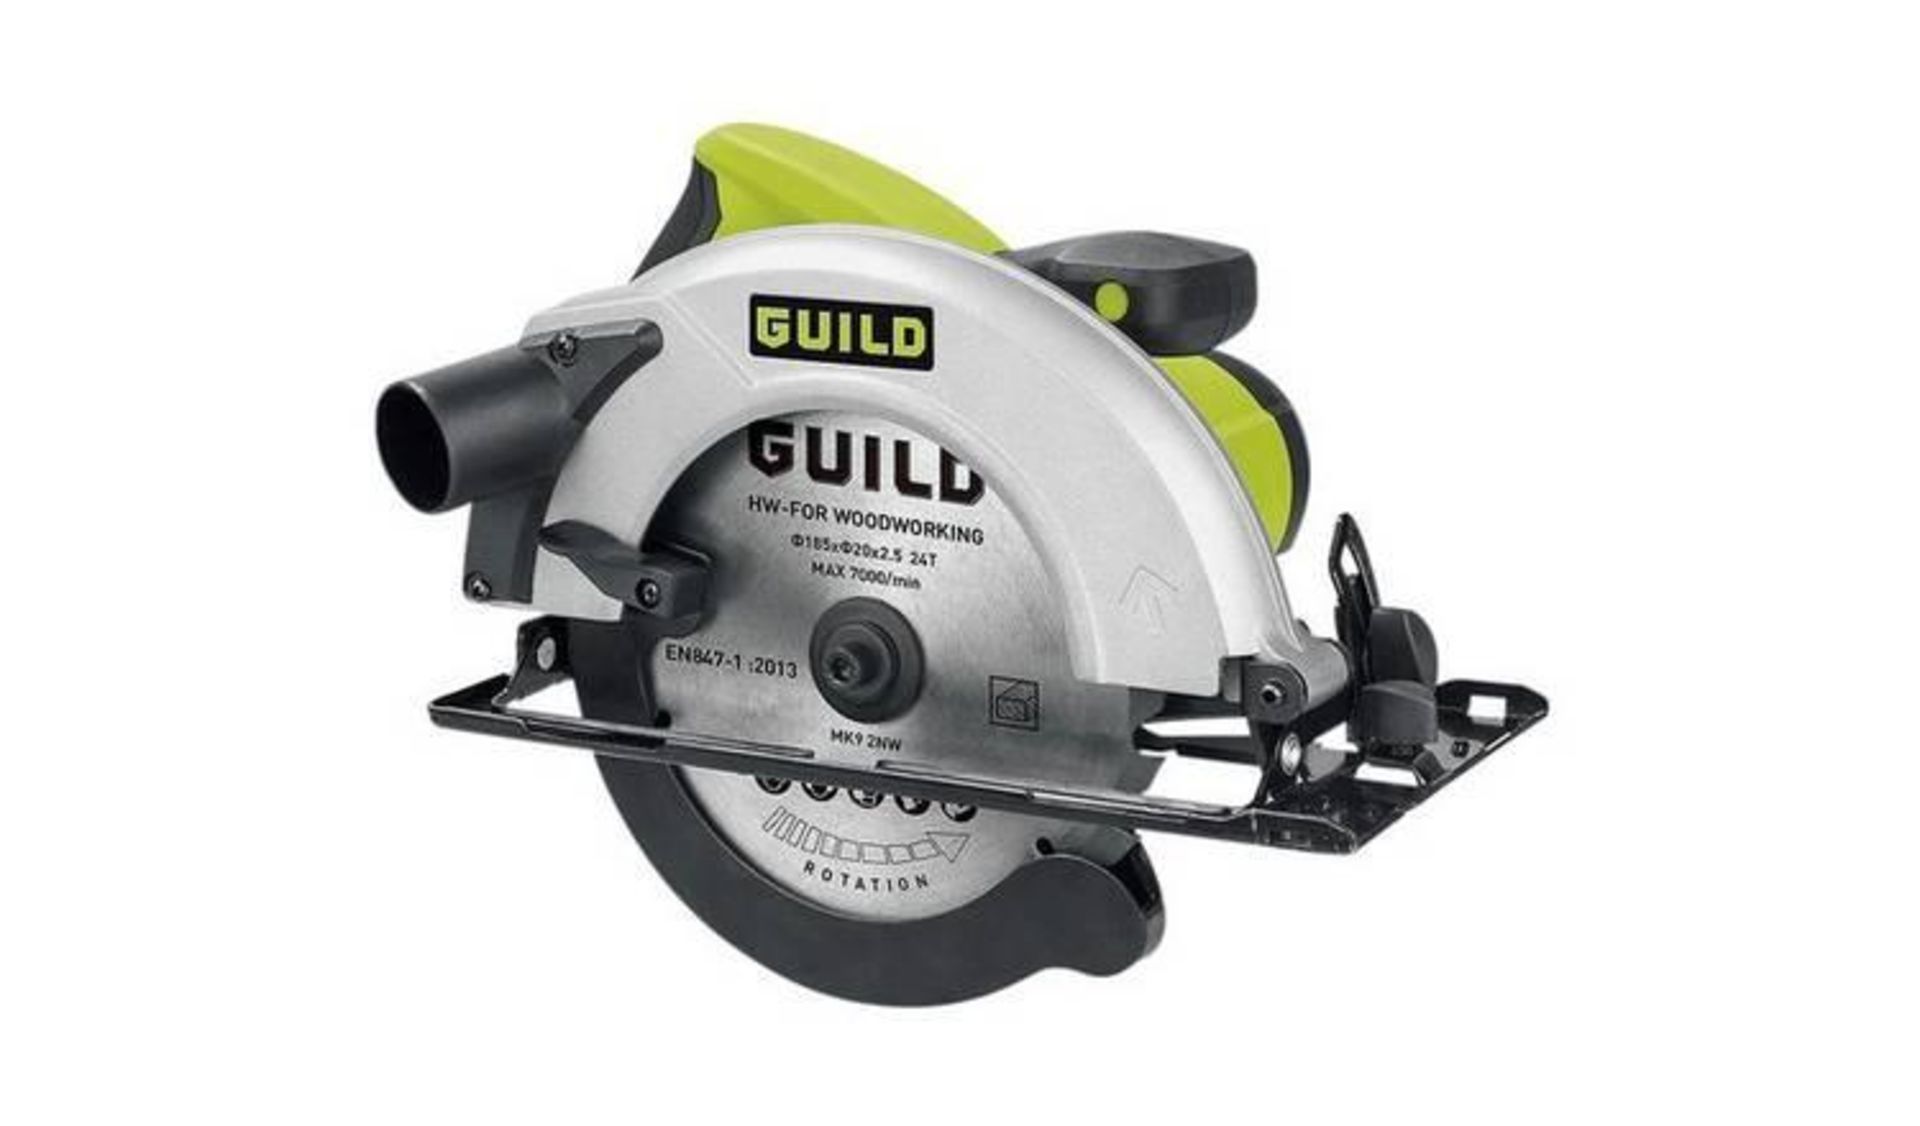 Guild 185mm Circular Saw - 1400W PSC185G 482/1041 £50.00 RRP